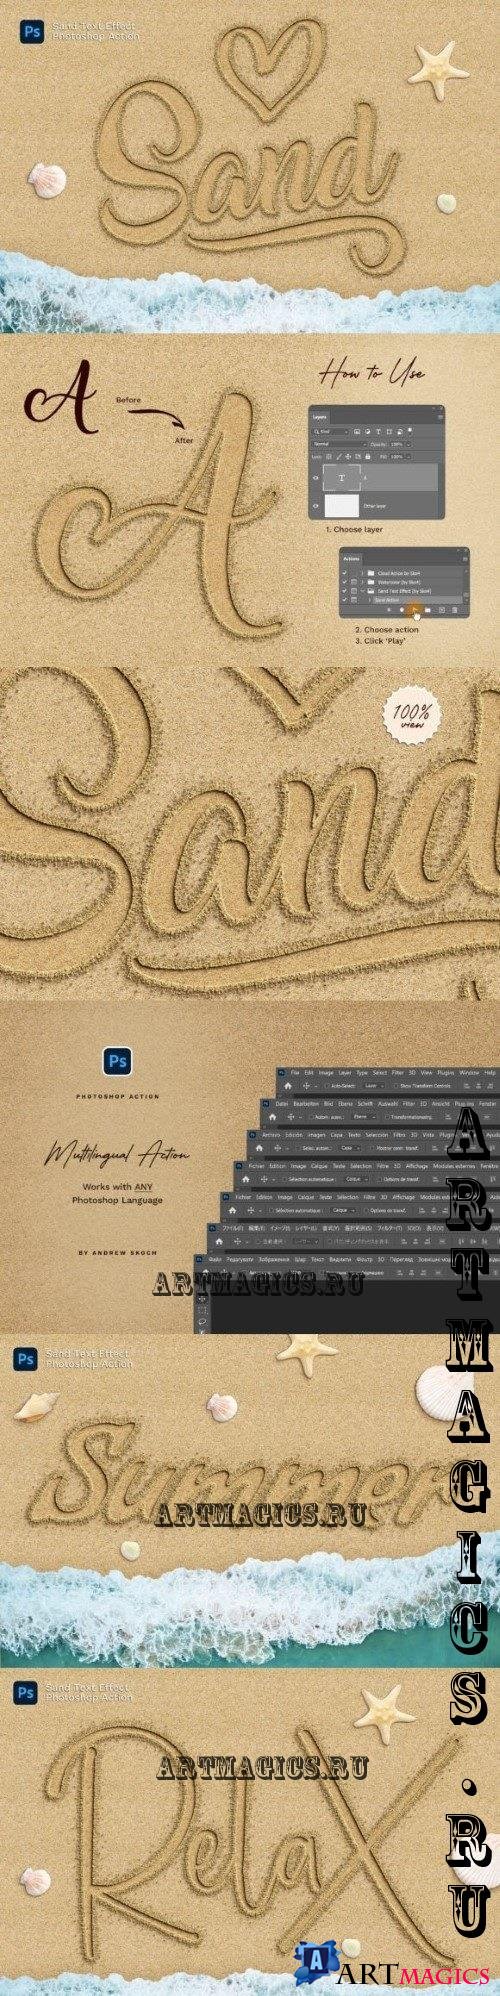 Sand Effect Photoshop Action - 91990065